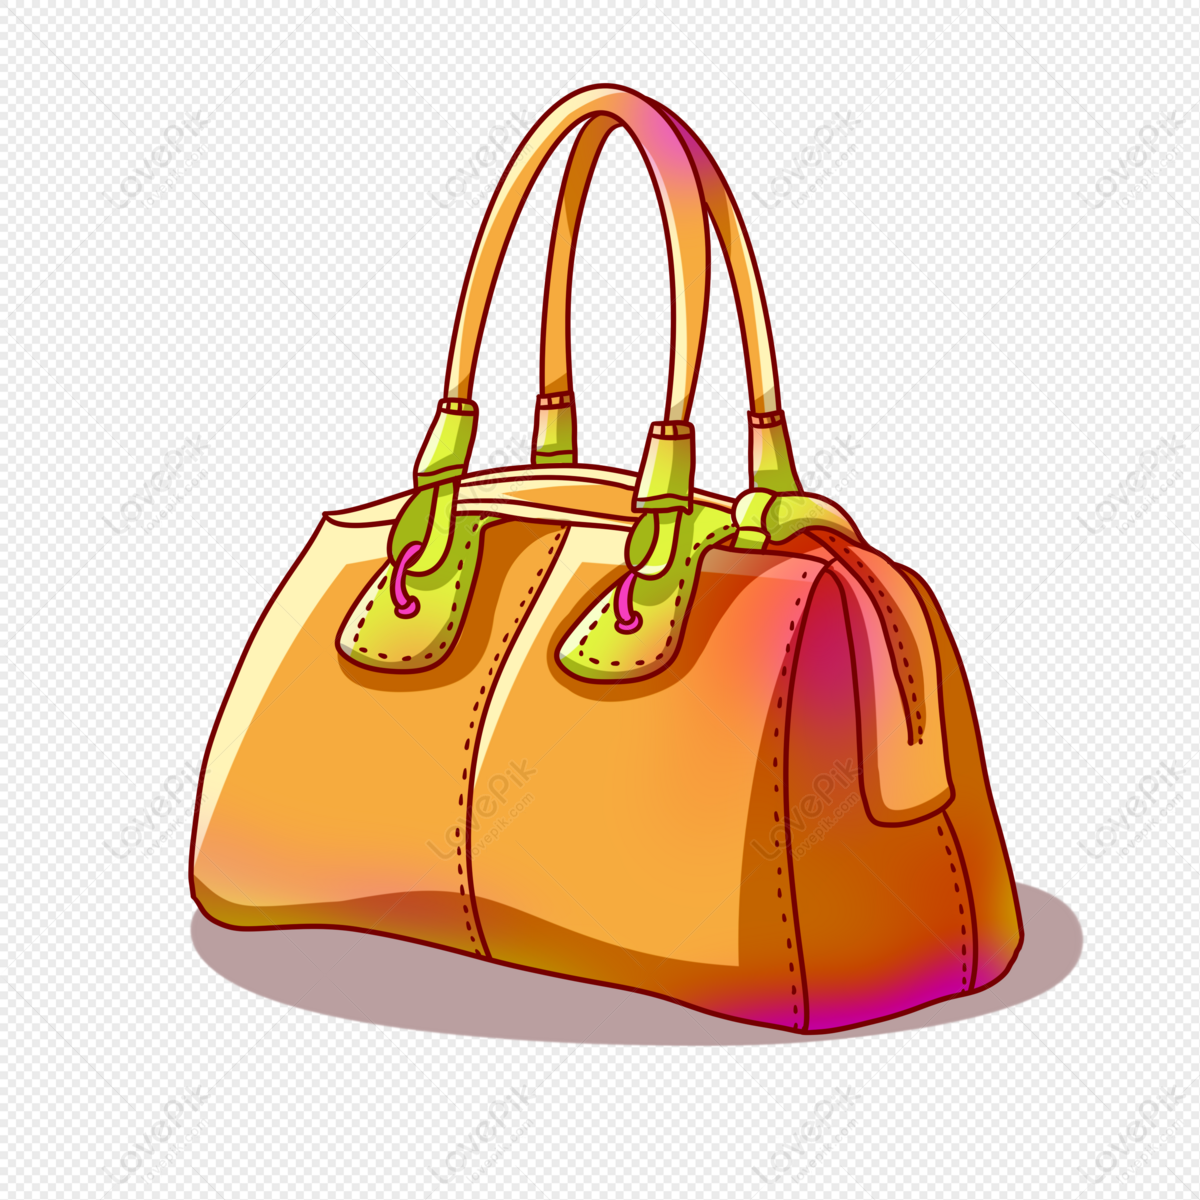 handbag-man-images-hd-pictures-for-free-vectors-psd-download